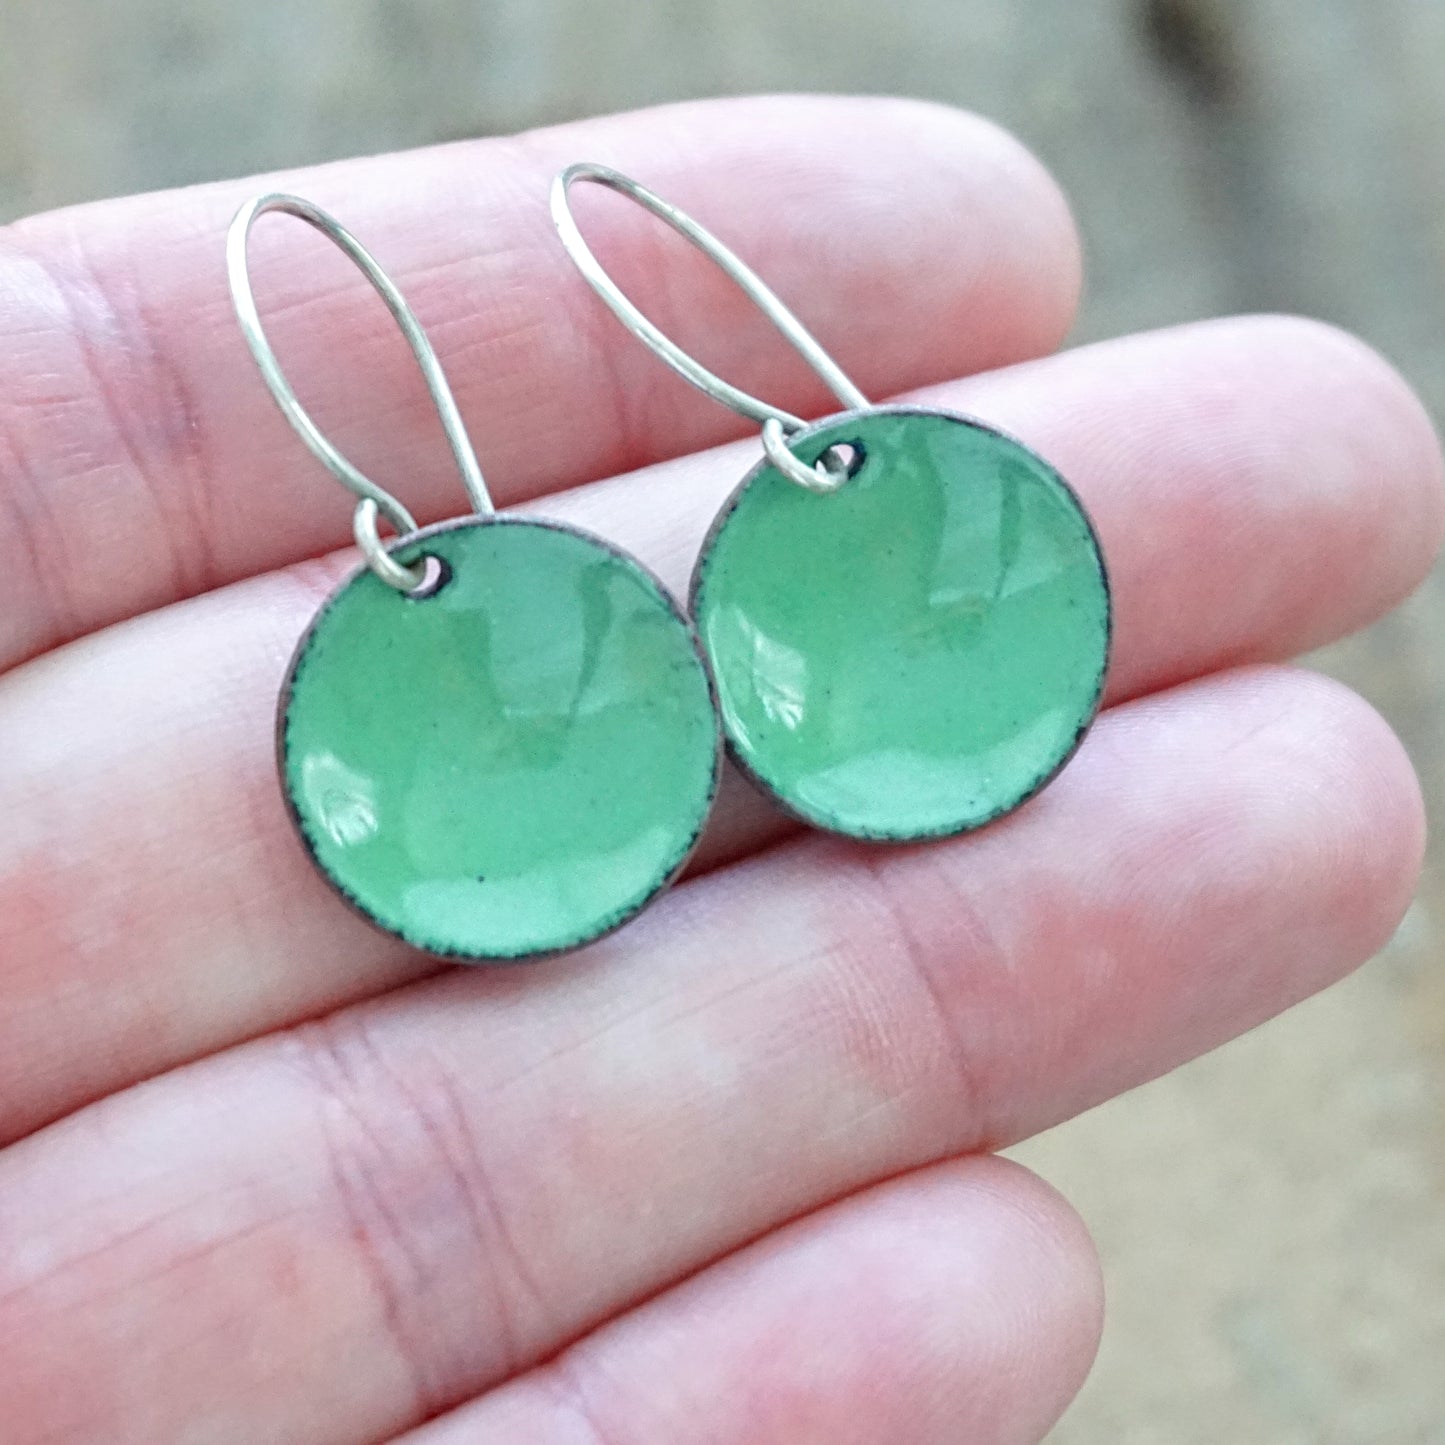 Spring Green Enamel Disc Earrings